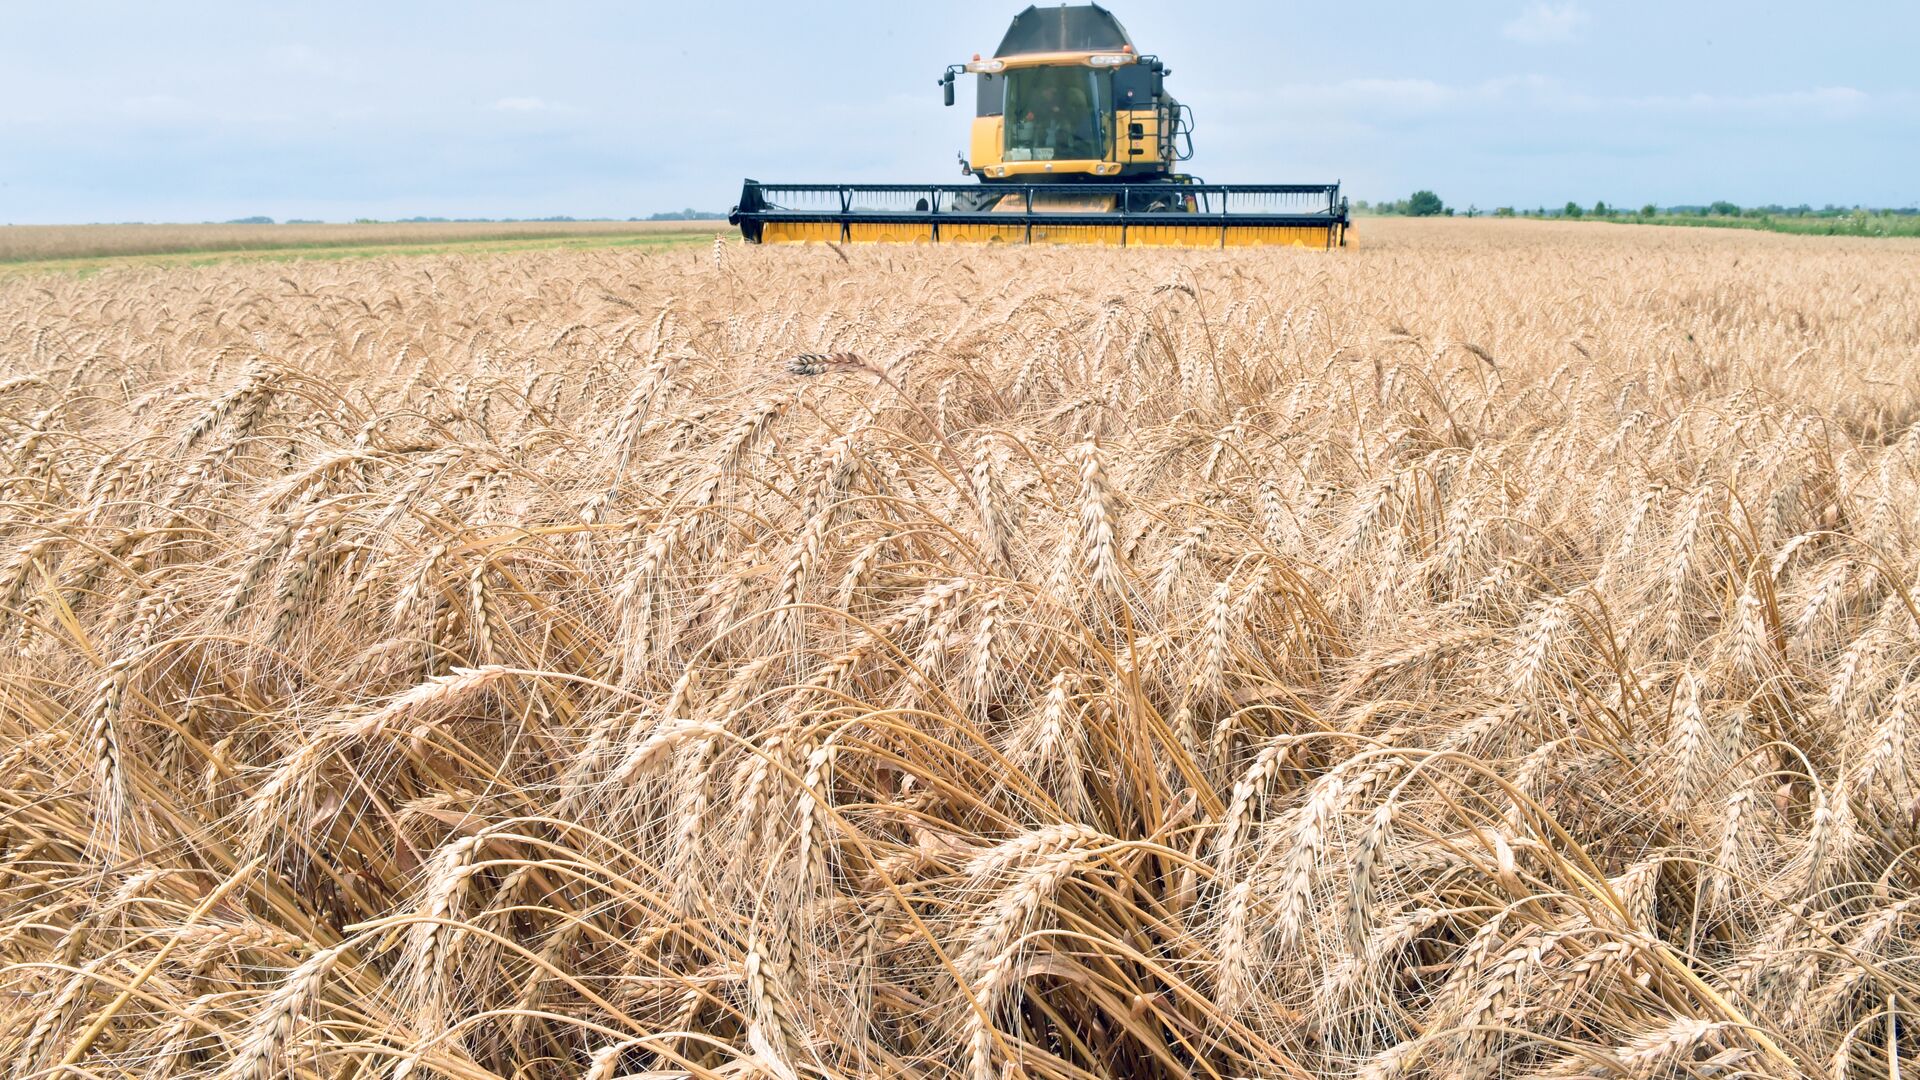 A combine harvester gathers grain from a field in Ukraine (file). - Sputnik International, 1920, 24.06.2022